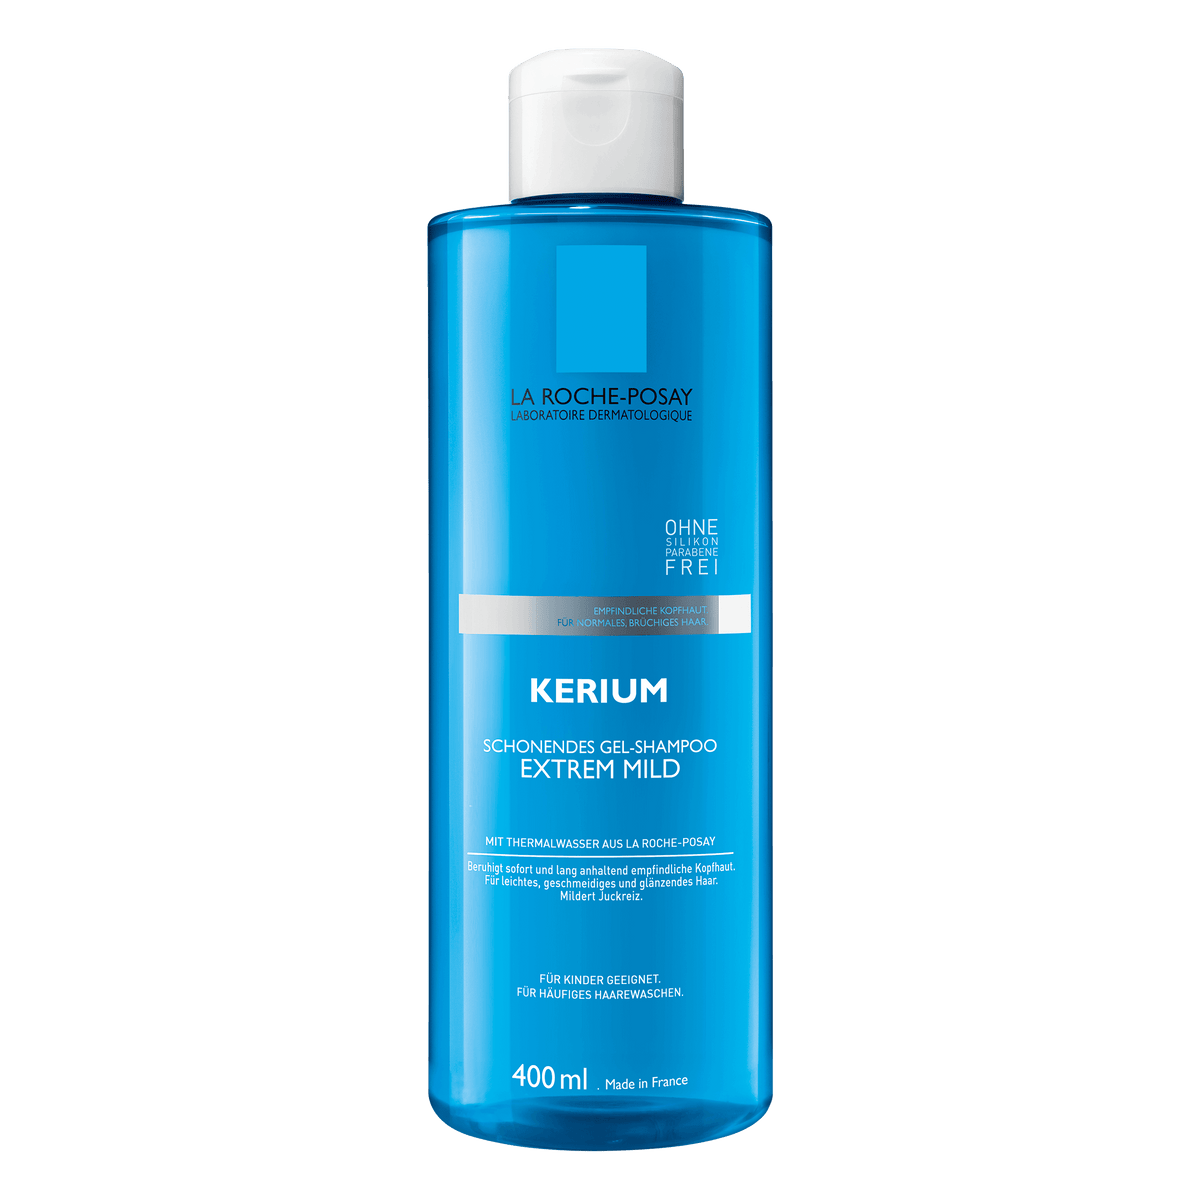 La Roche-Posay Kerium Mild Gel-Shampoo Hair Care -